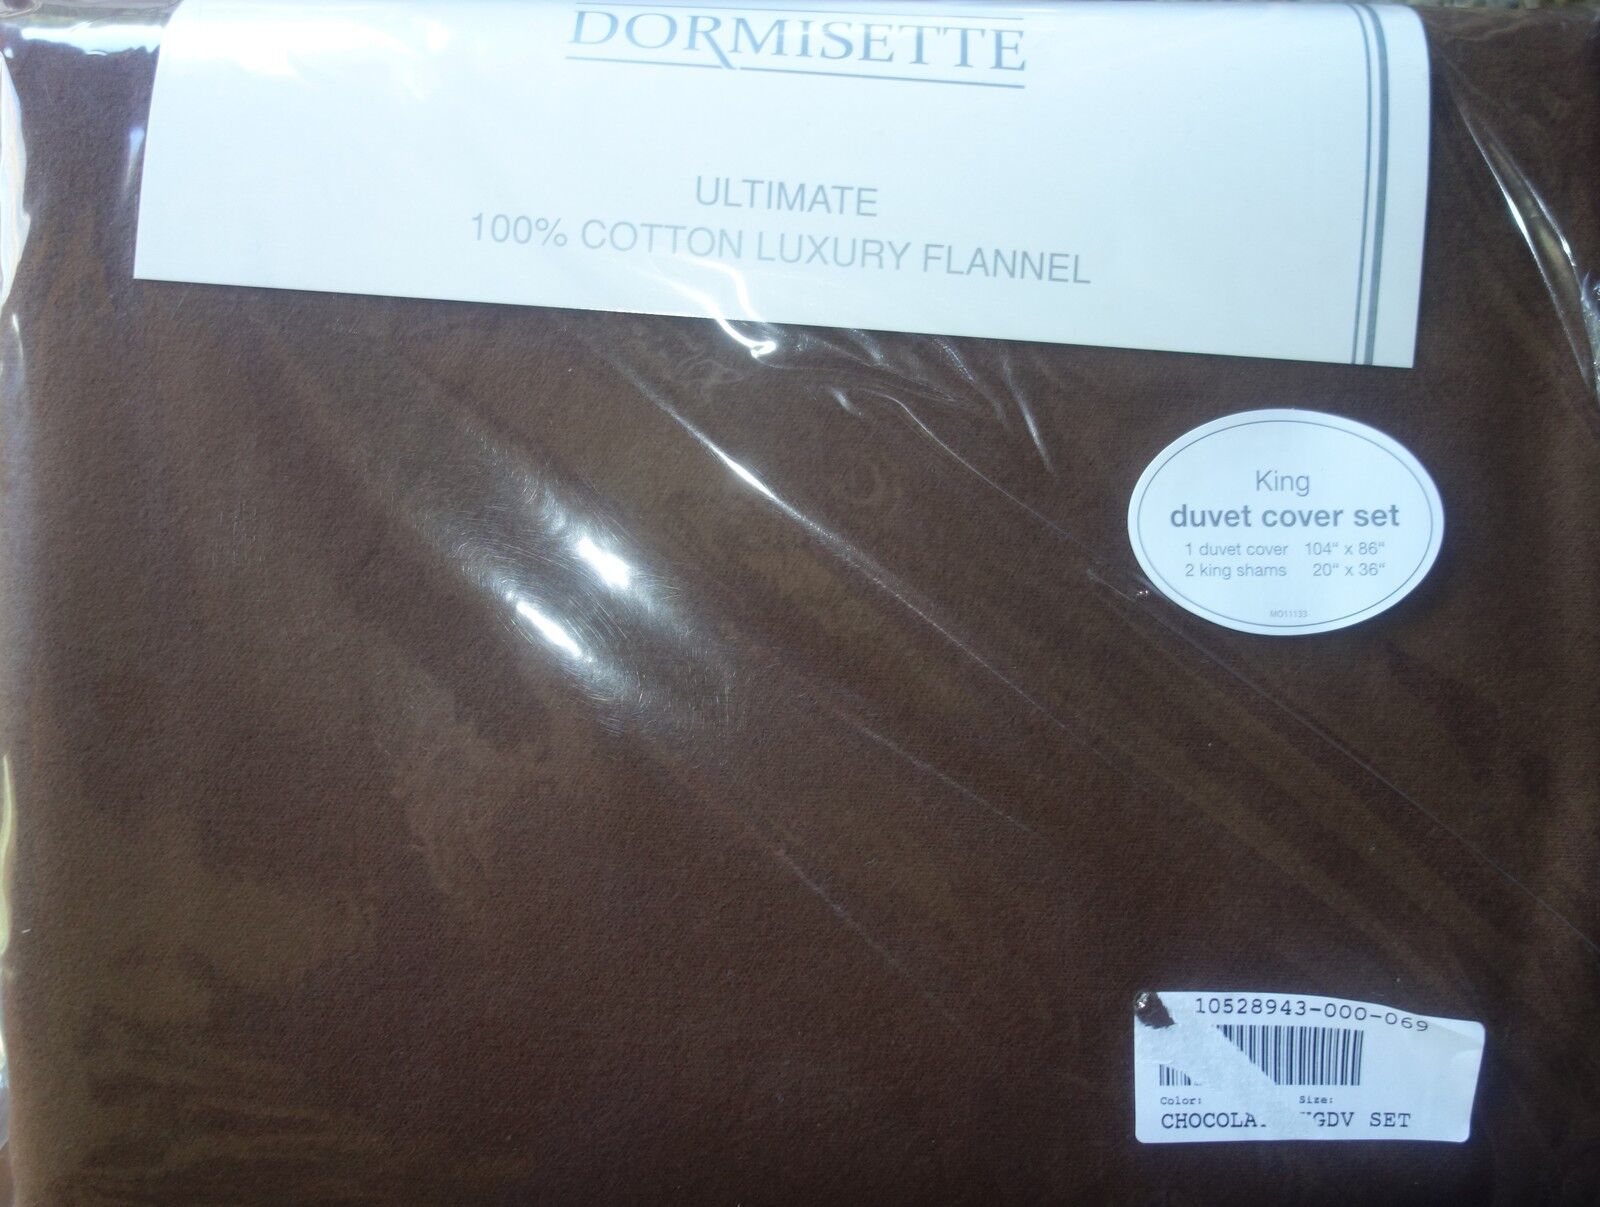 DORMISETTE GERMAN LUXURY Cotton FLANNEL 3PC KING DUVET COVER SET chocolate NEW - $120.27